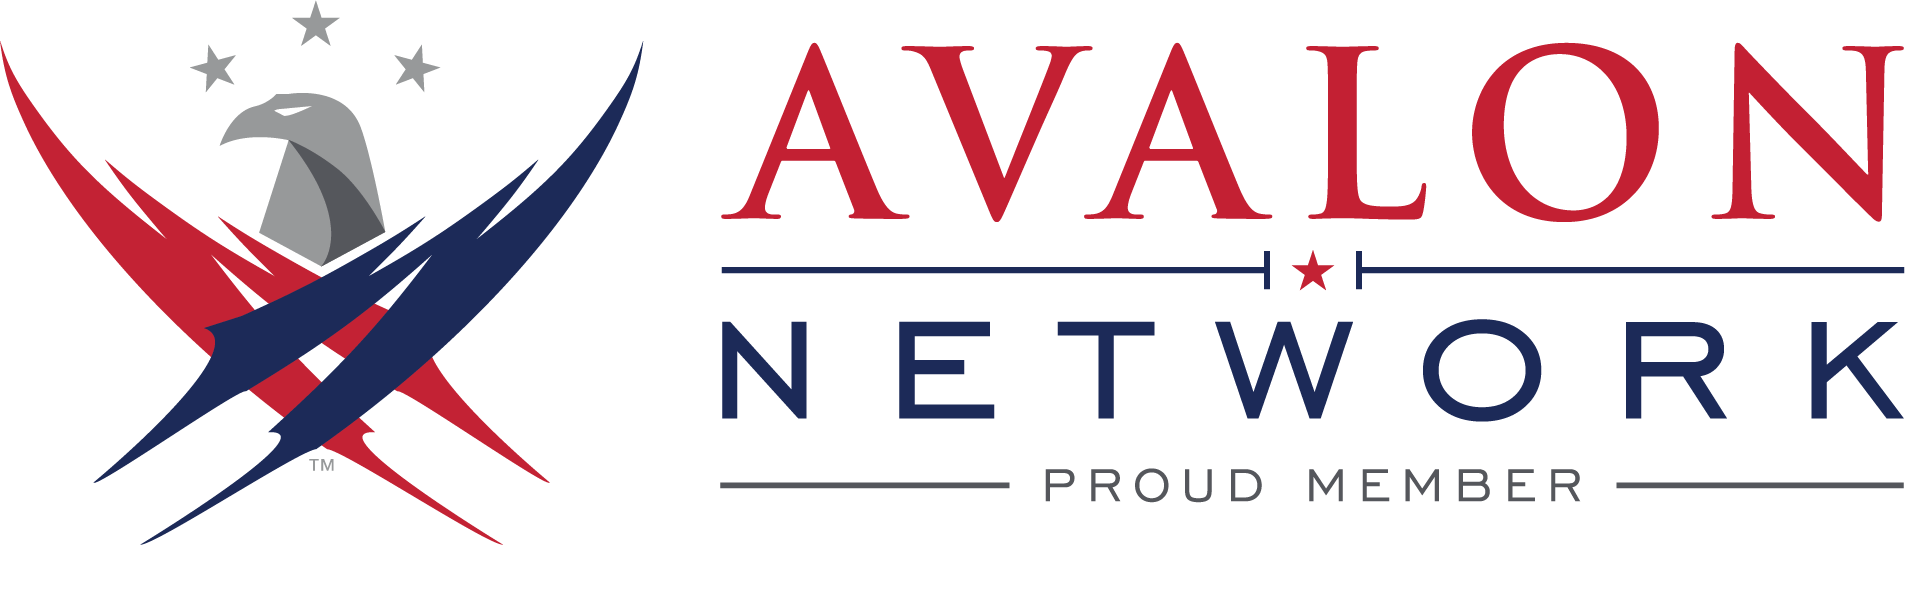 Avalon Network logo